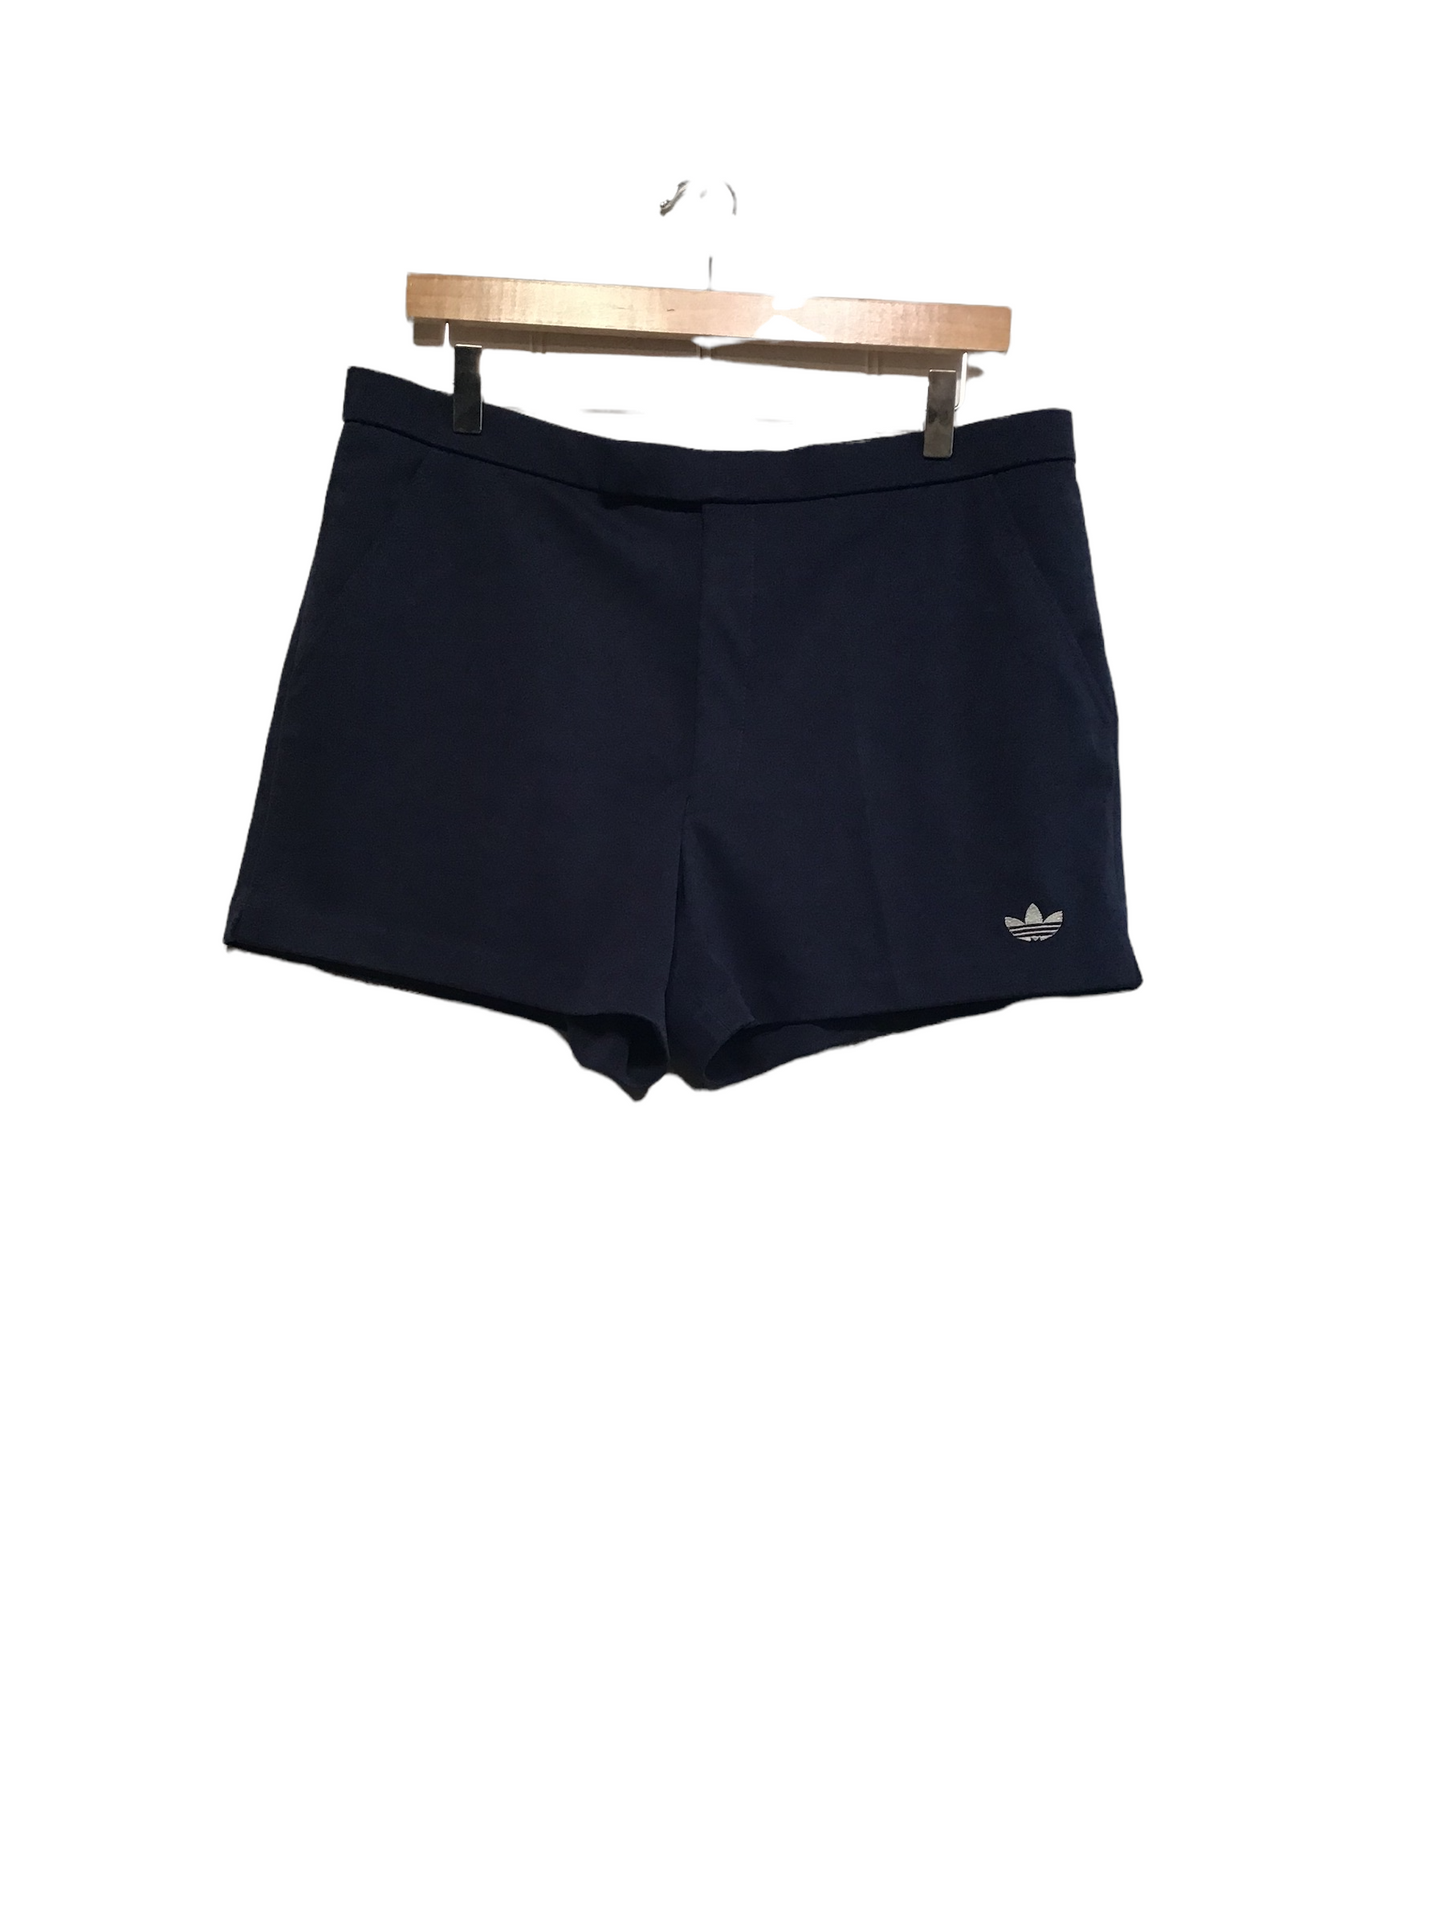 Navy Adidas Sport Short (Size S)